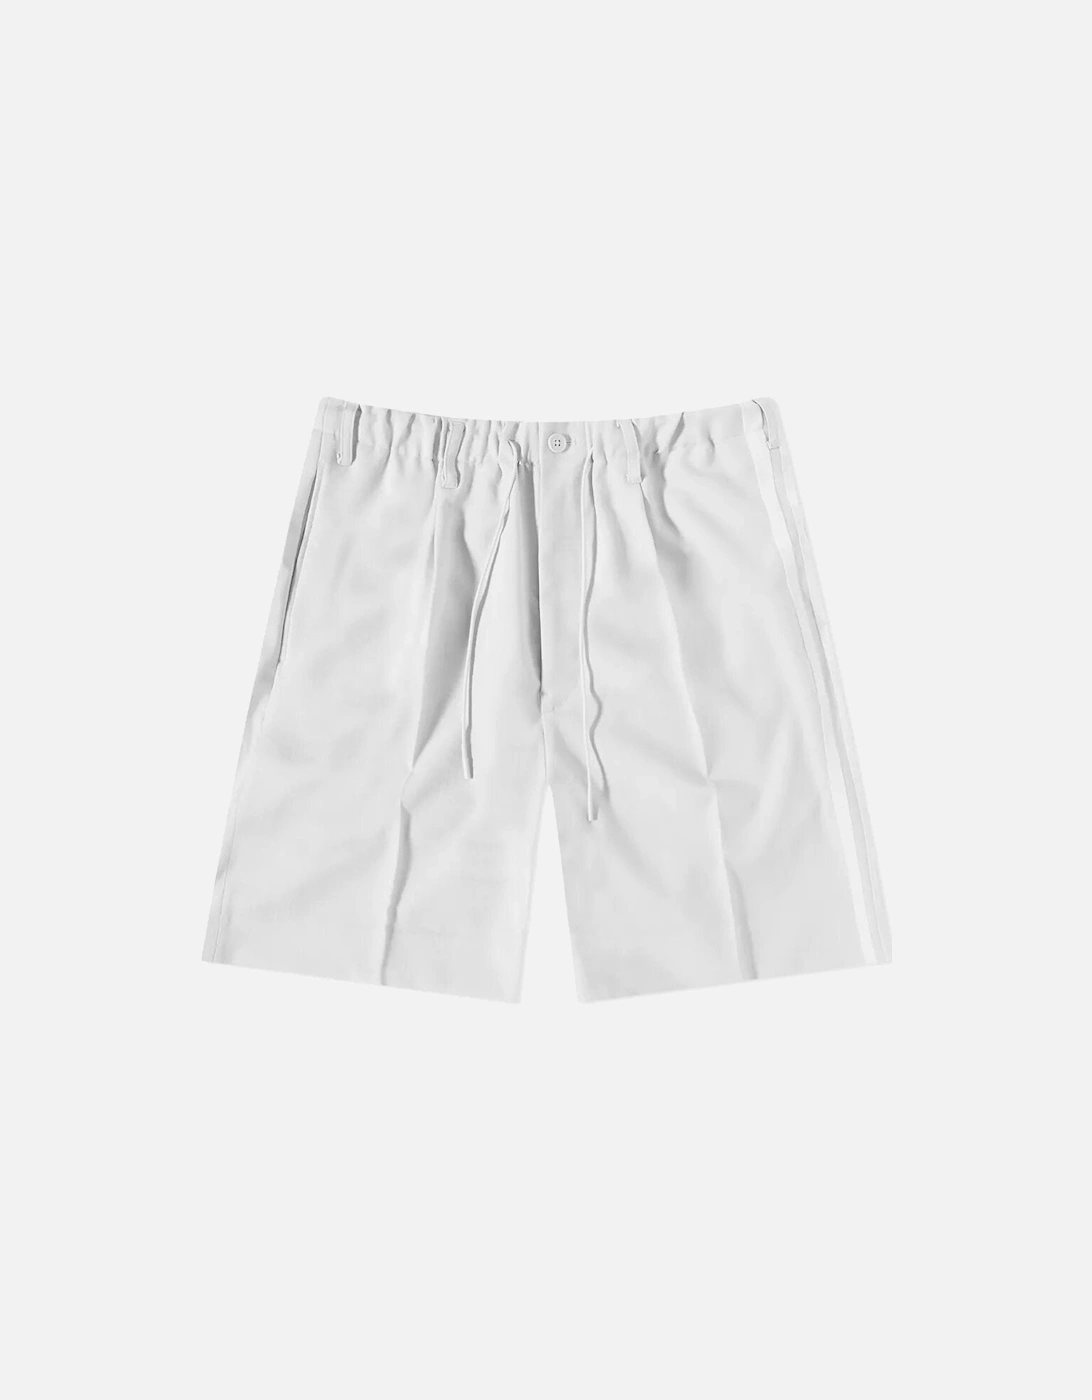 Y-3 Men's Striped Shorts Cream, 4 of 3